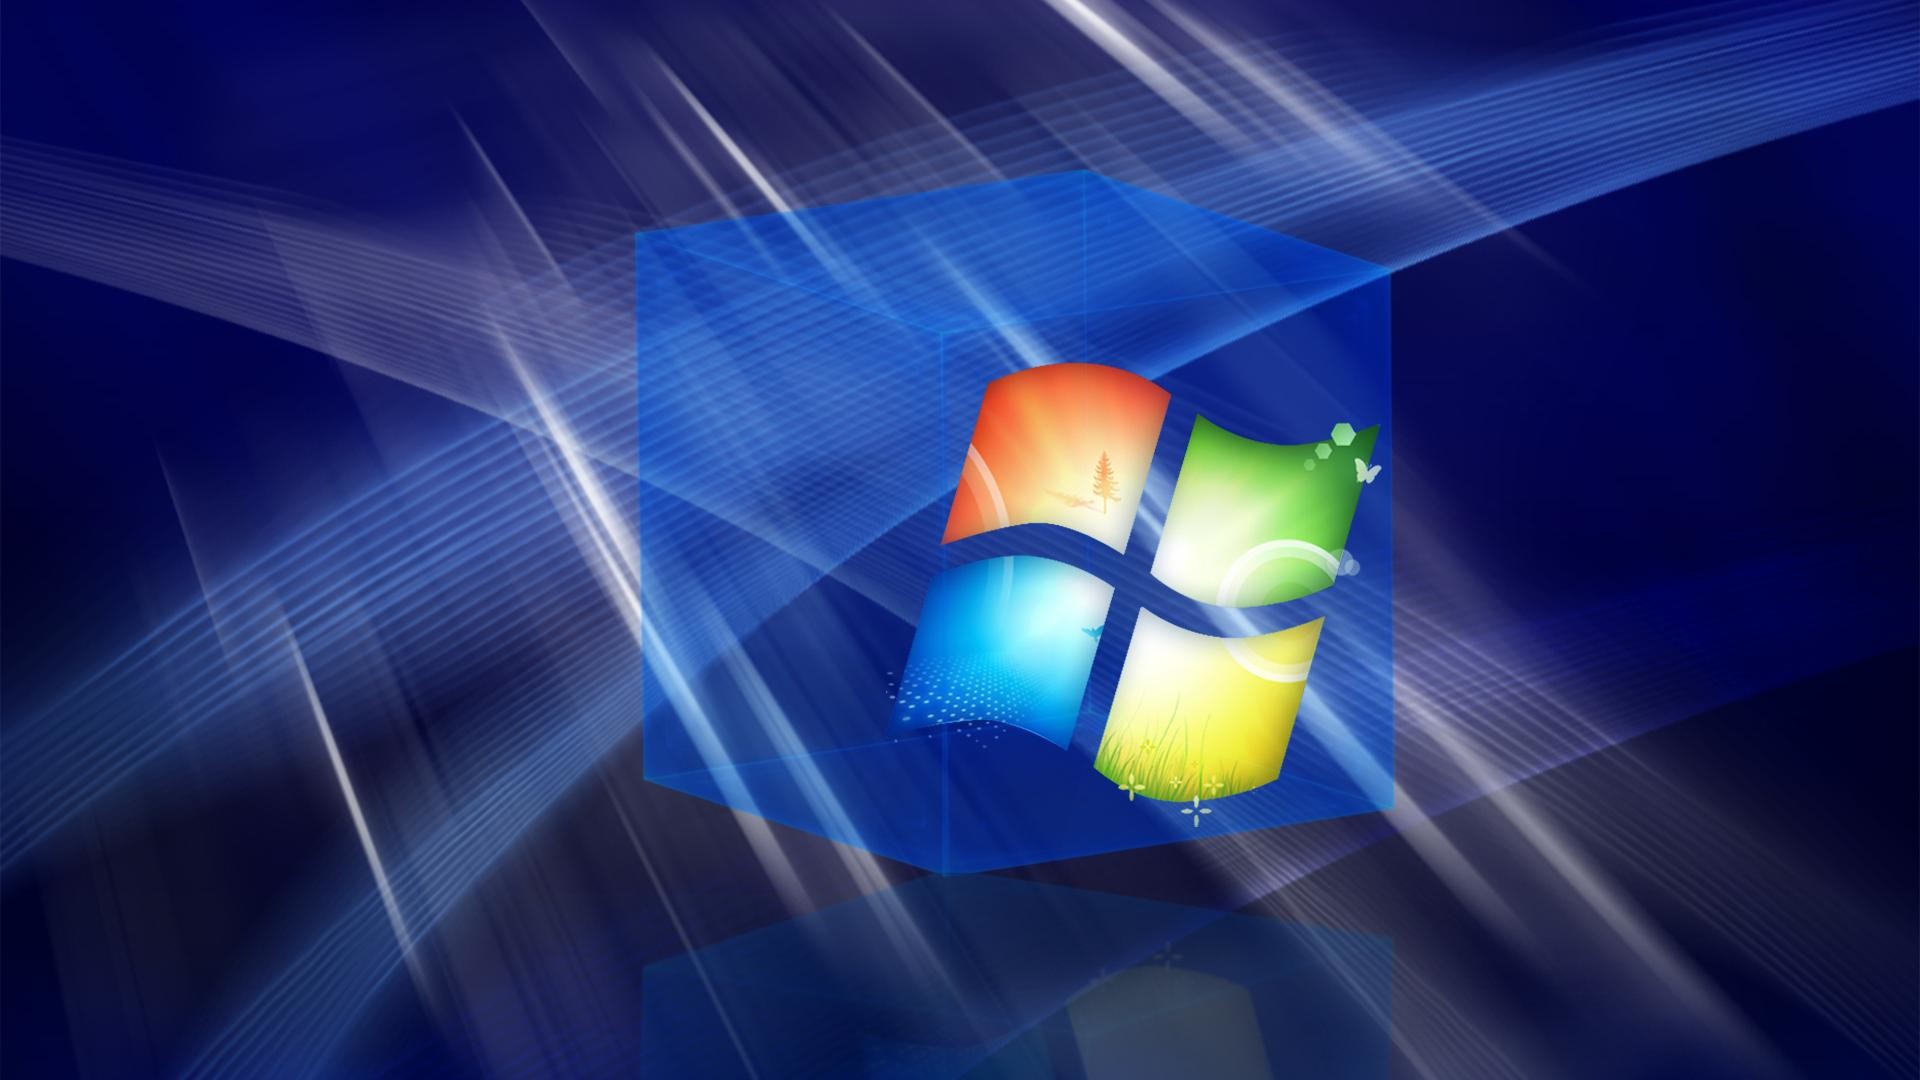 1920x1080  Hd 3d Blue Windows Cube desktop backgrounds wide  wallpapers:1280x800,1440x900,1680x1050